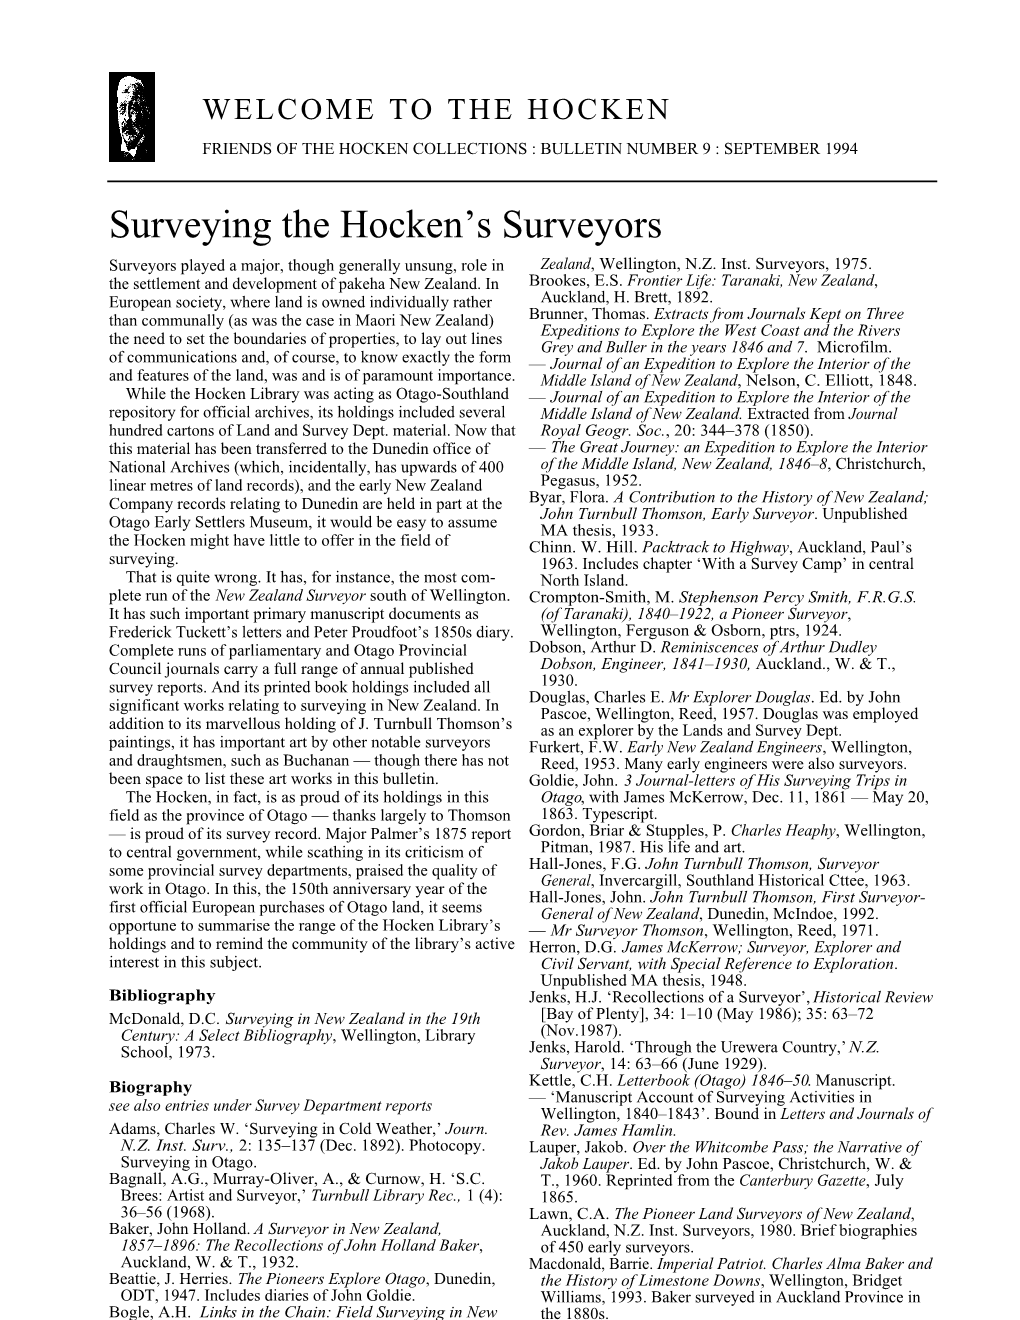 Surveying the Hocken's Surveyors